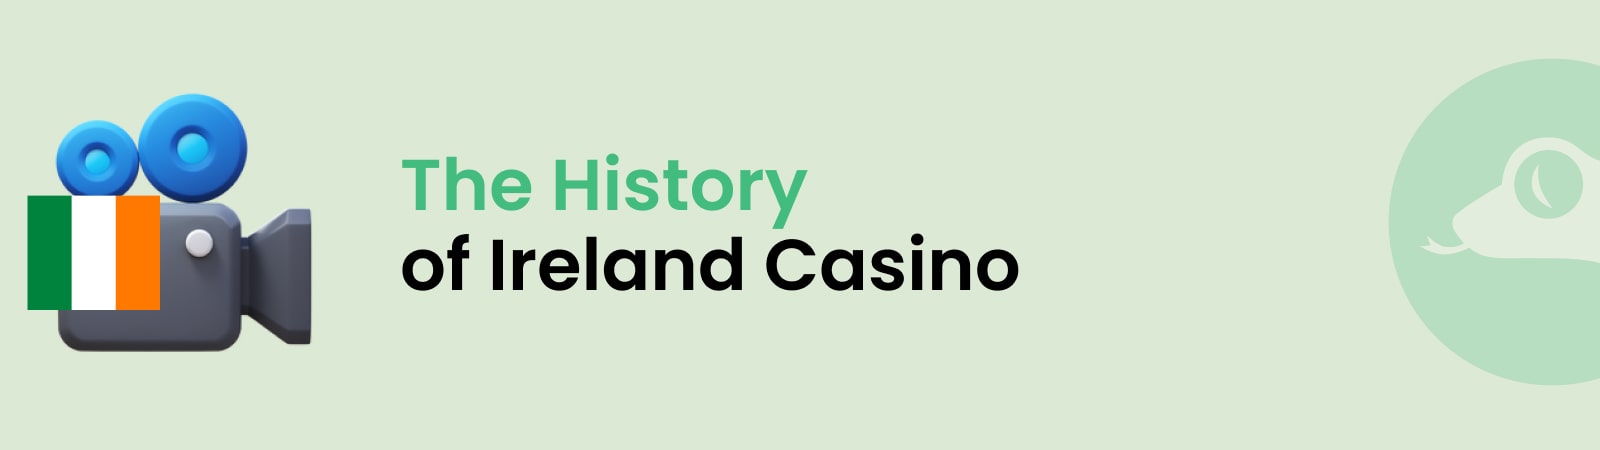 history of ireland casino